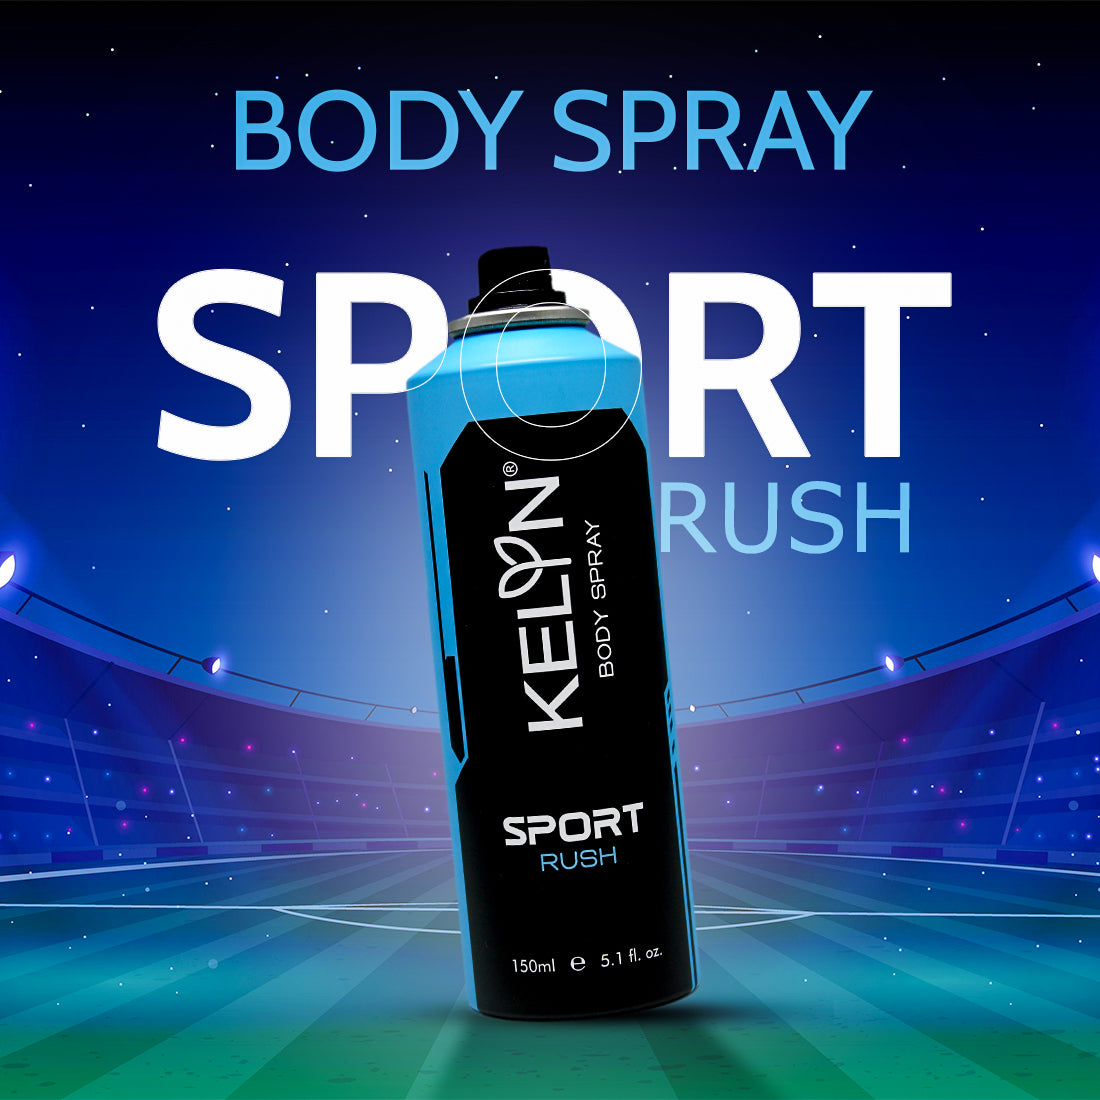 Sports Active, Rush, Intense Deodorants Body Spray (Pack of 3) 150ml each